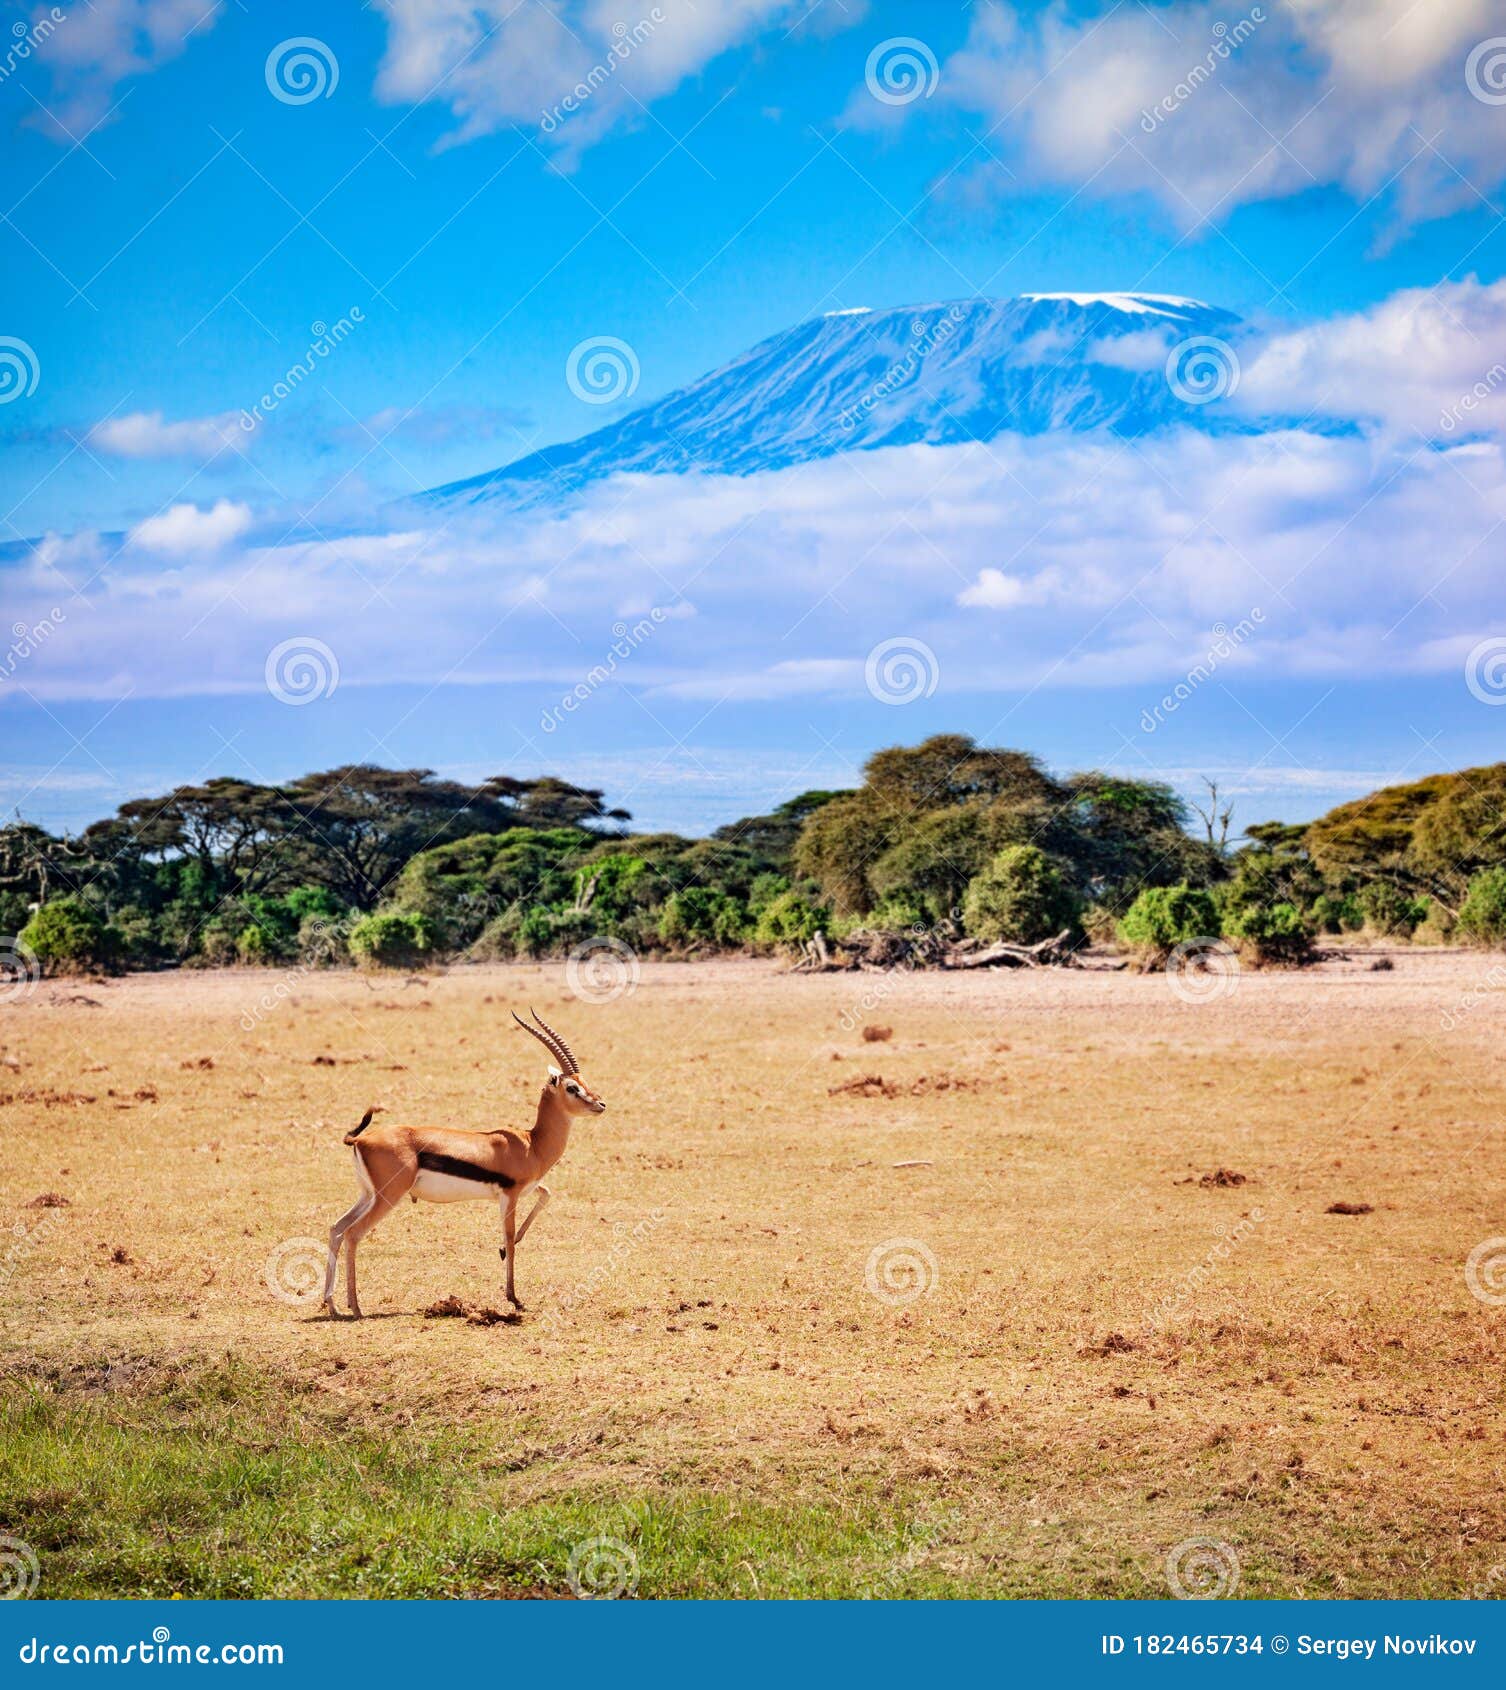 kilimanjaro and thomson`s gazelle in kenya savanna